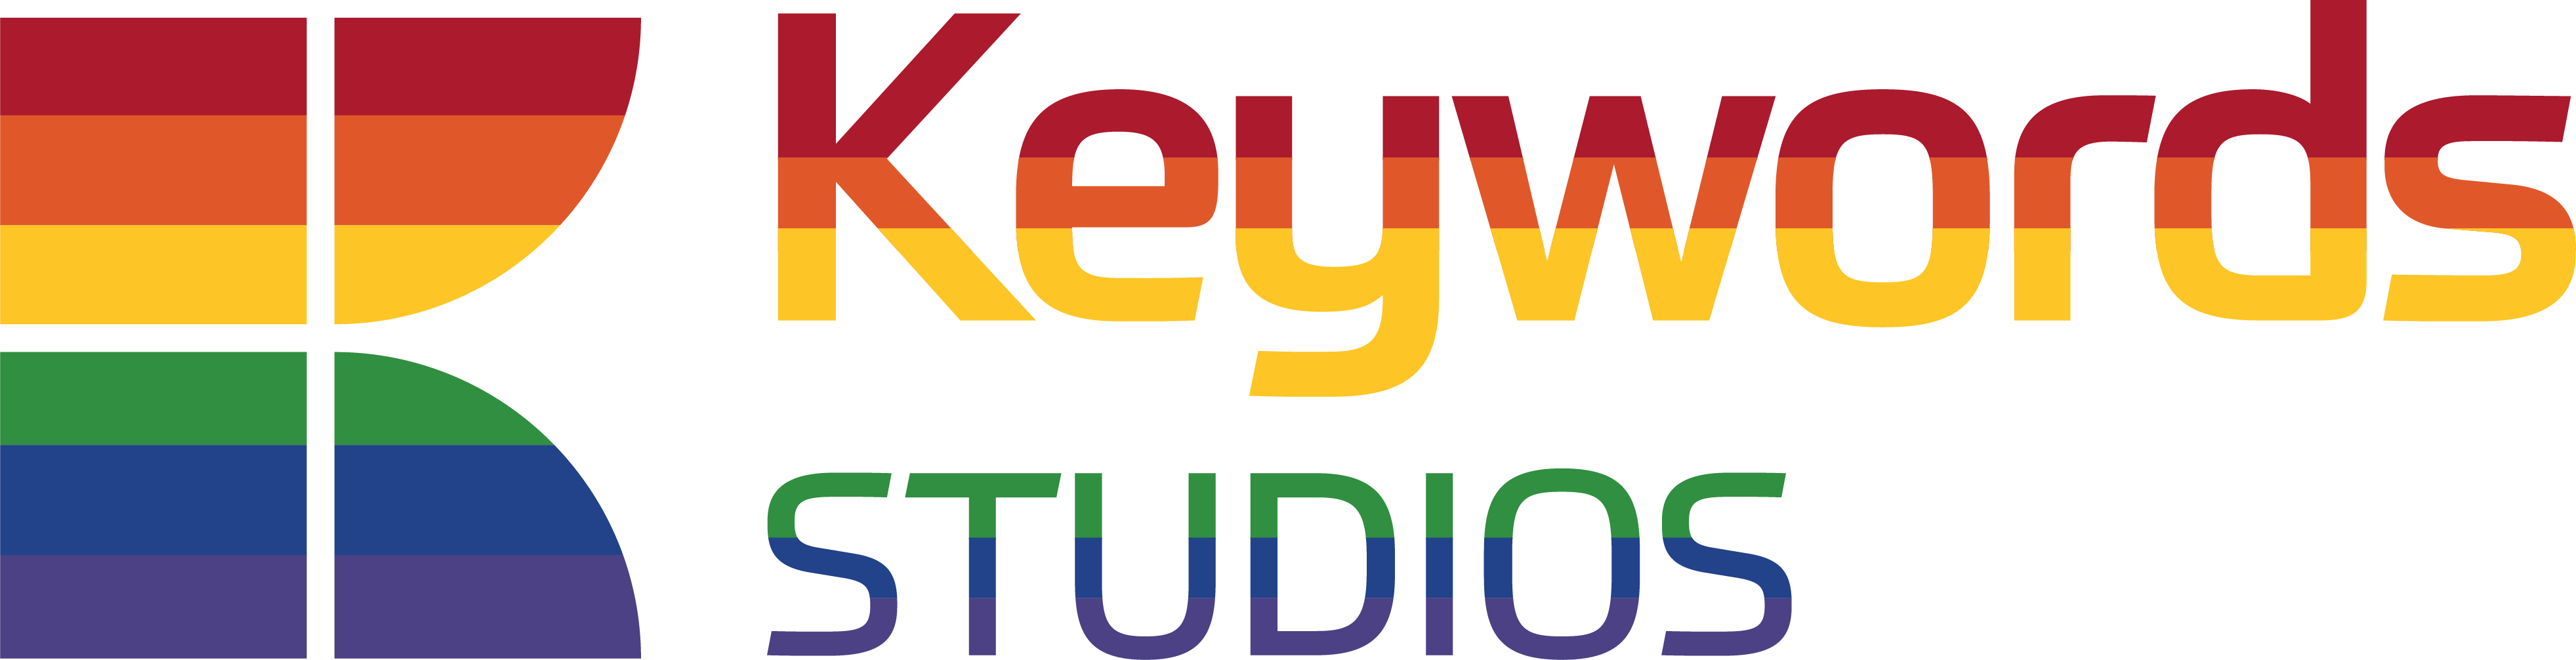 Contact Keywords Studios